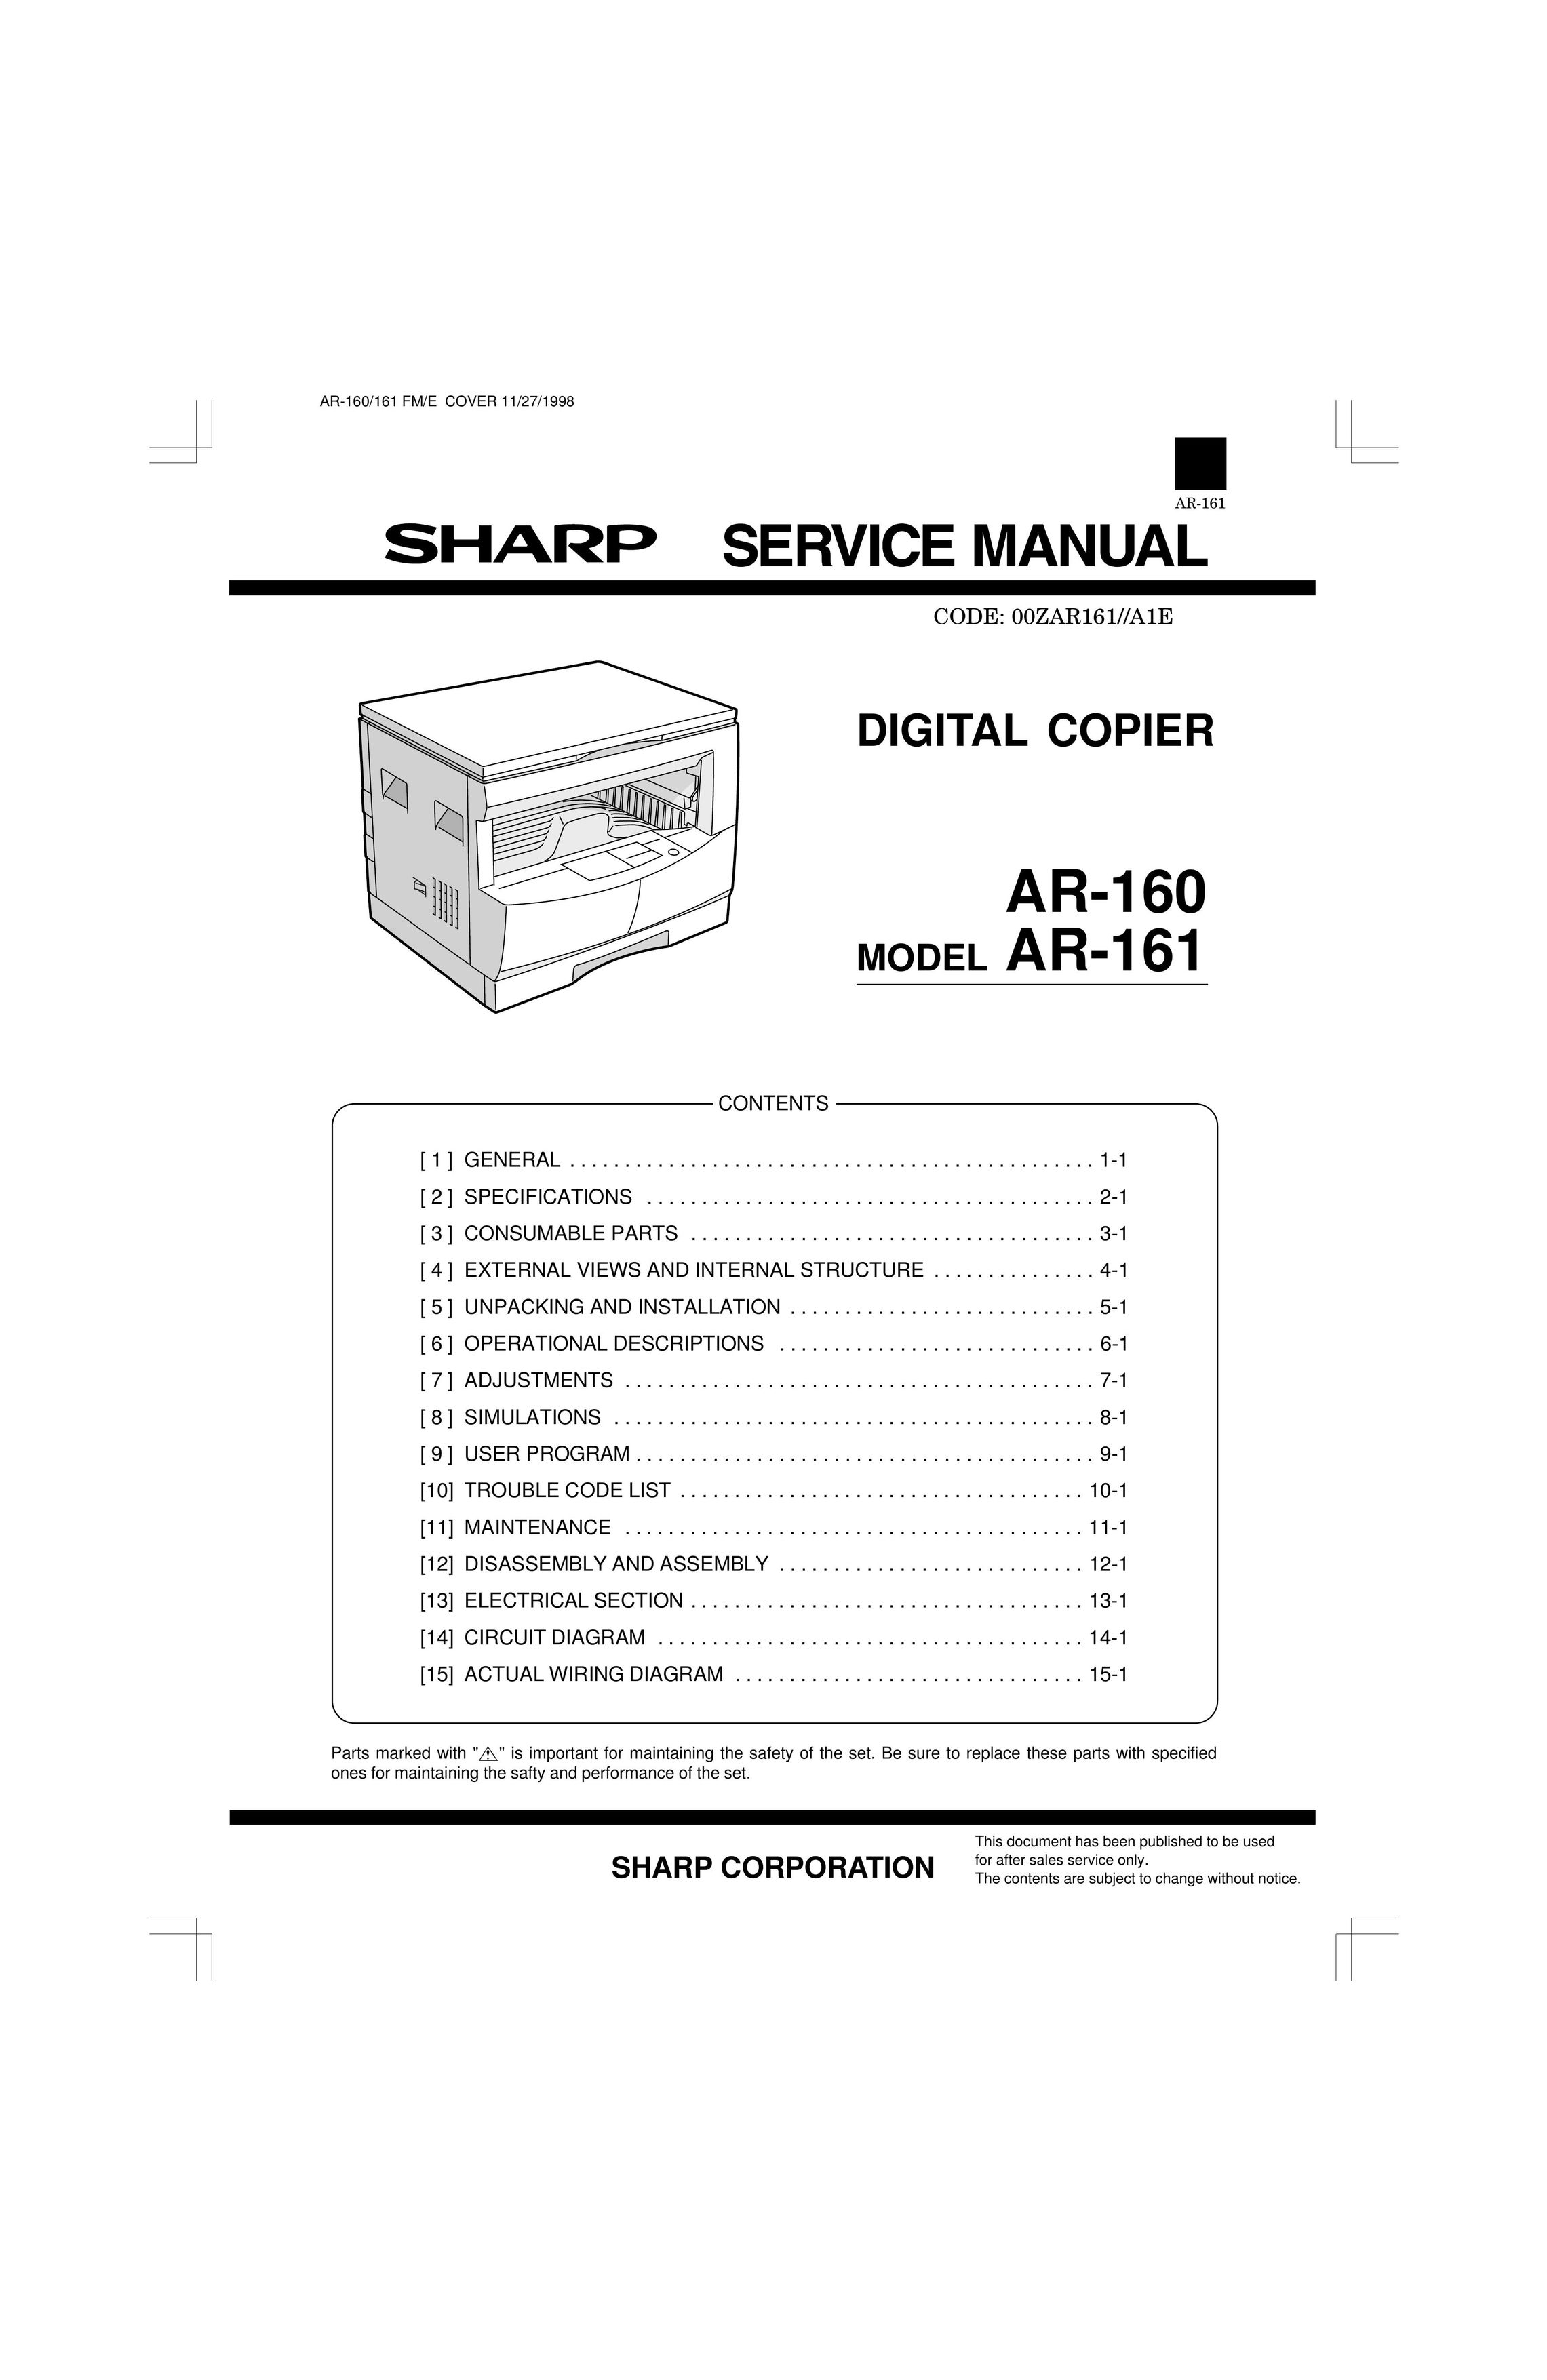 Sharp AR-160 Copier User Manual